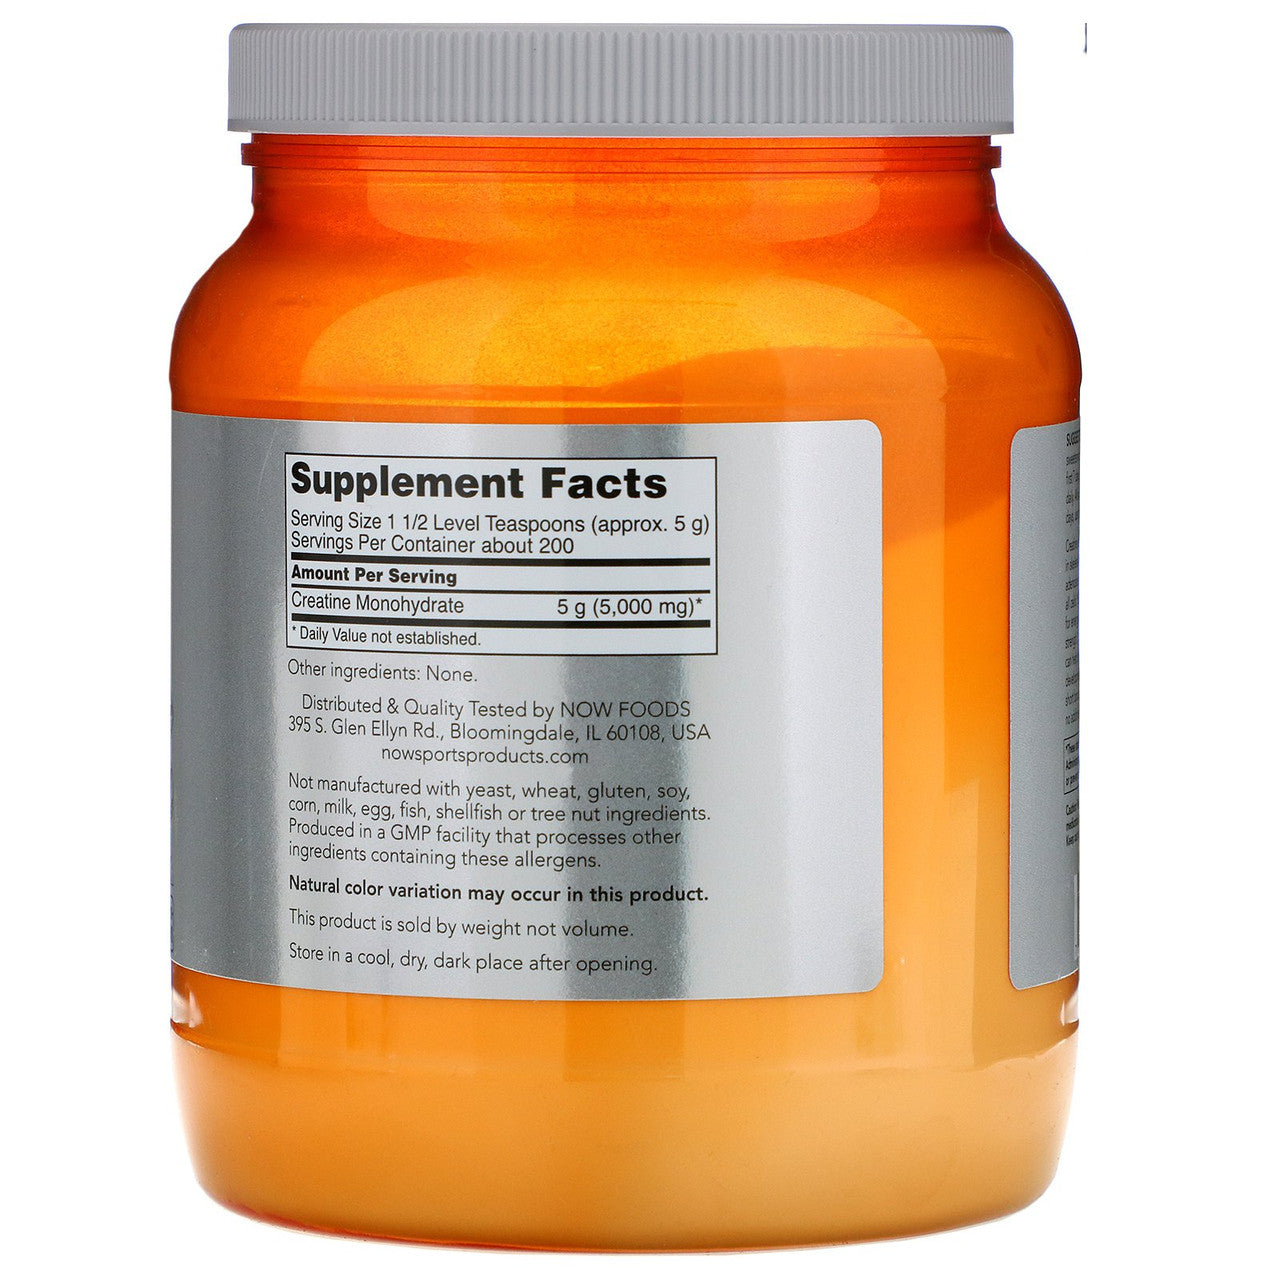 Now Creatine Monohydrate Powder Supplement Facts Label